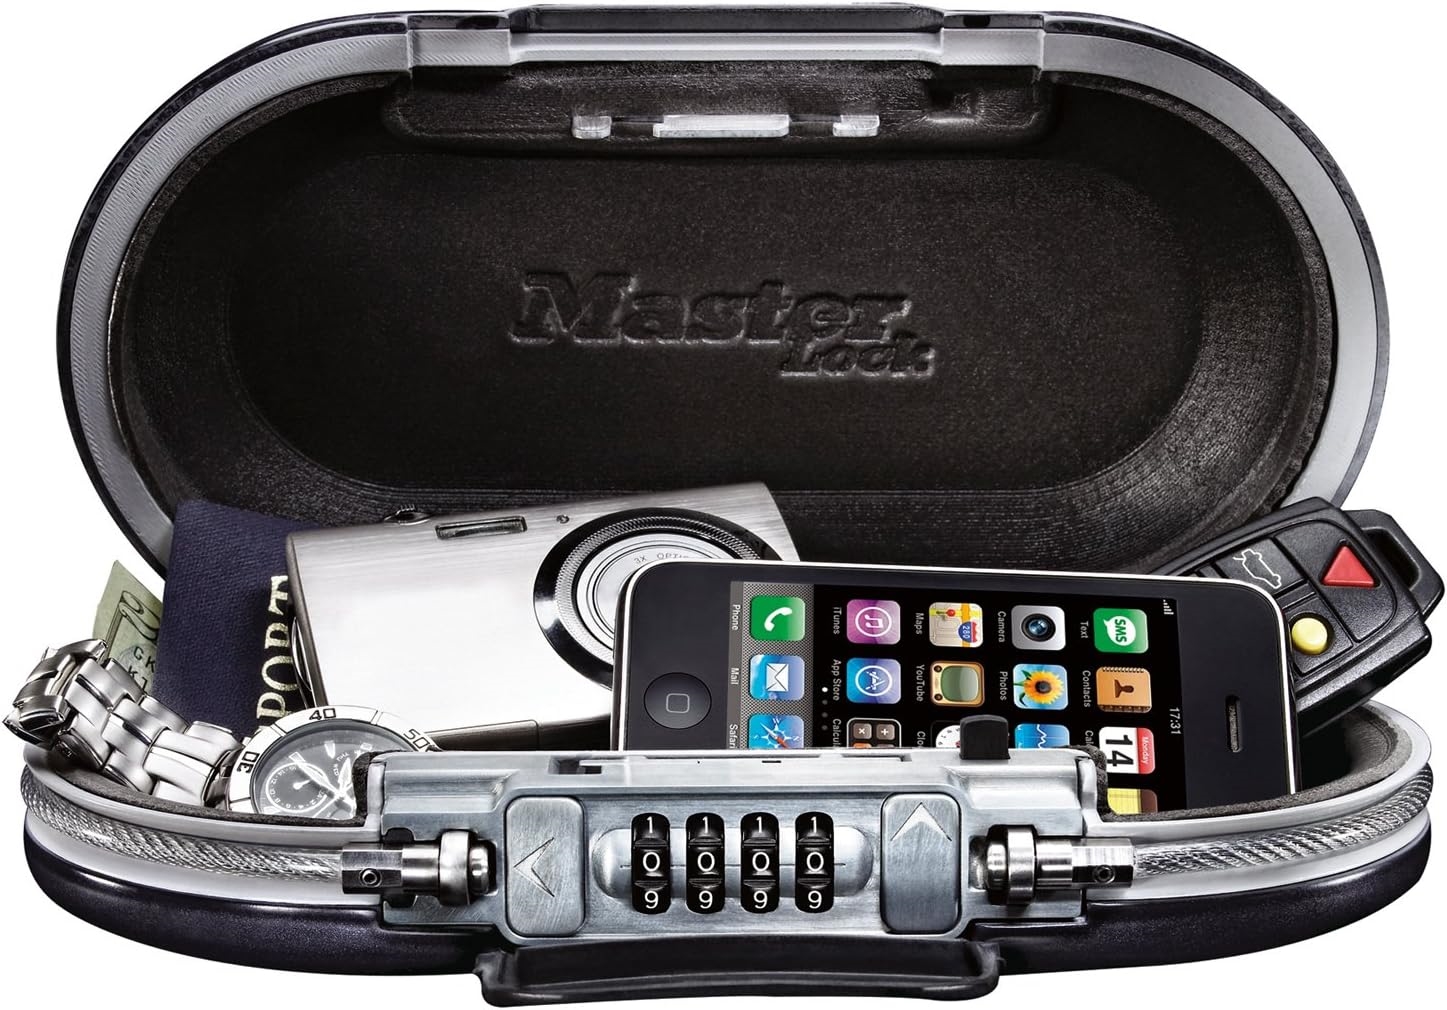 Master Lock Portable Safe Box | DeviceDaily.com